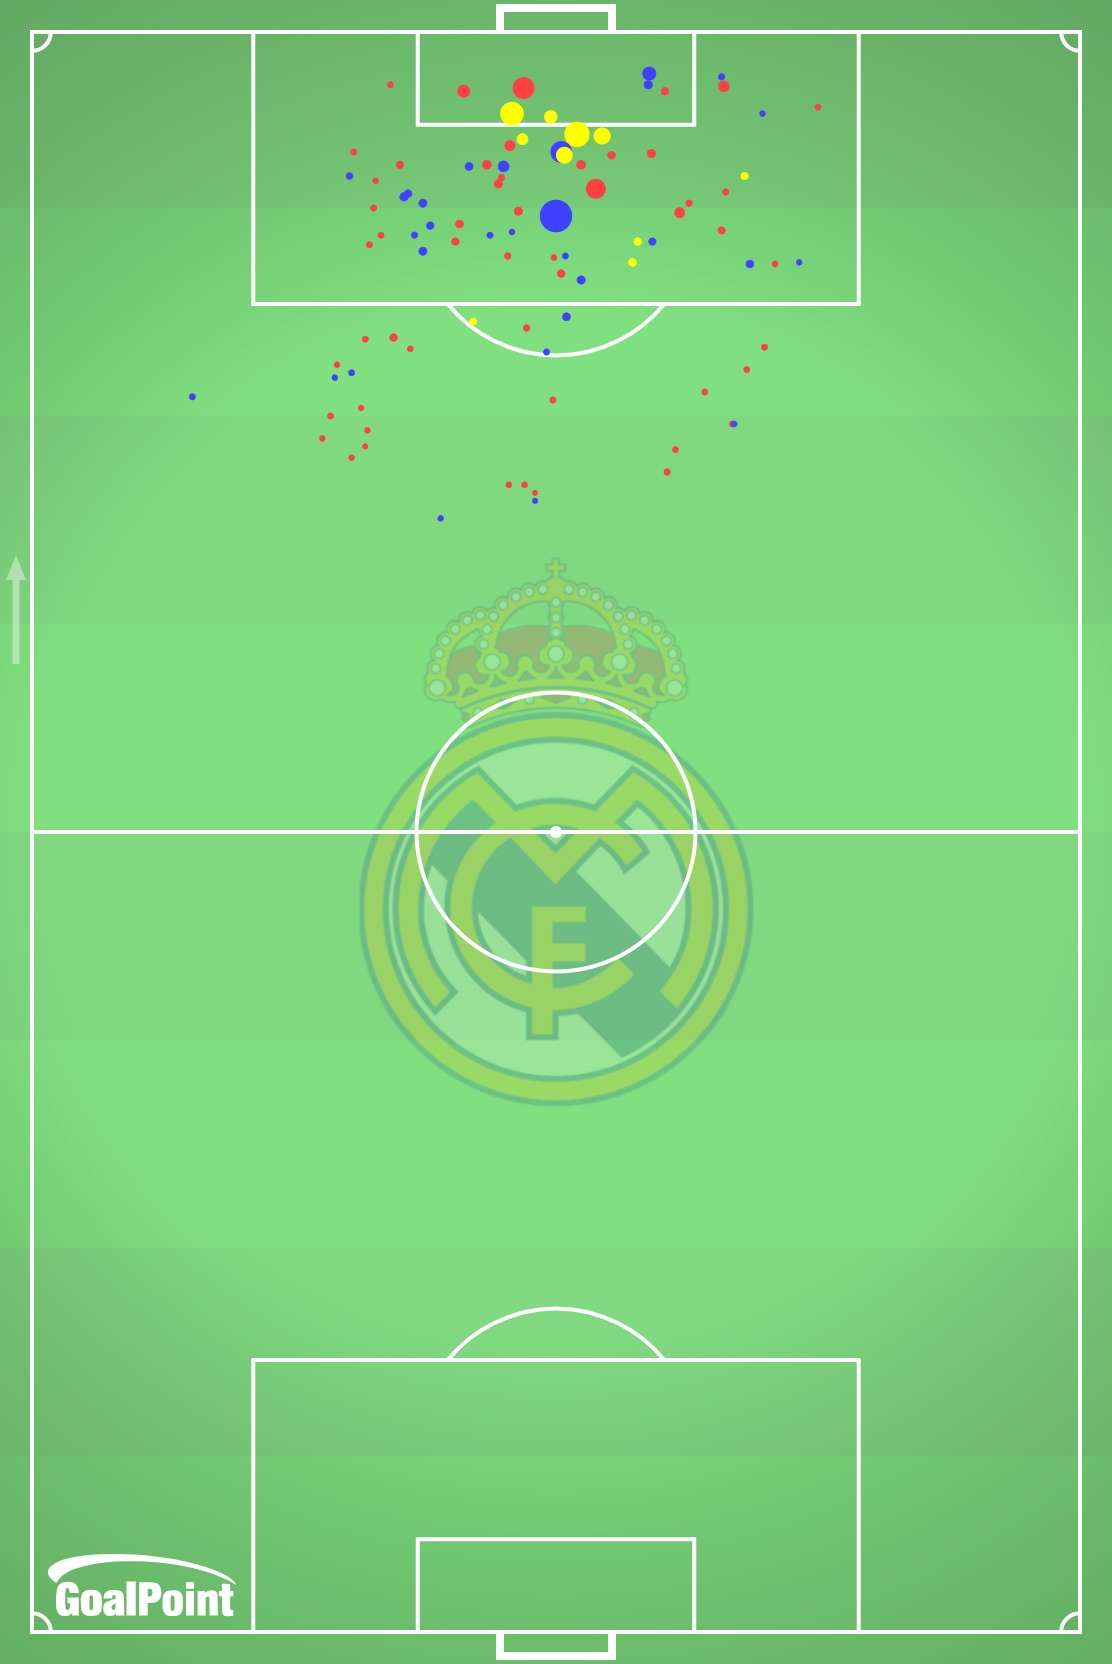 GoalPoint-Real-Madrid-Remates-xG-LaLiga-202324